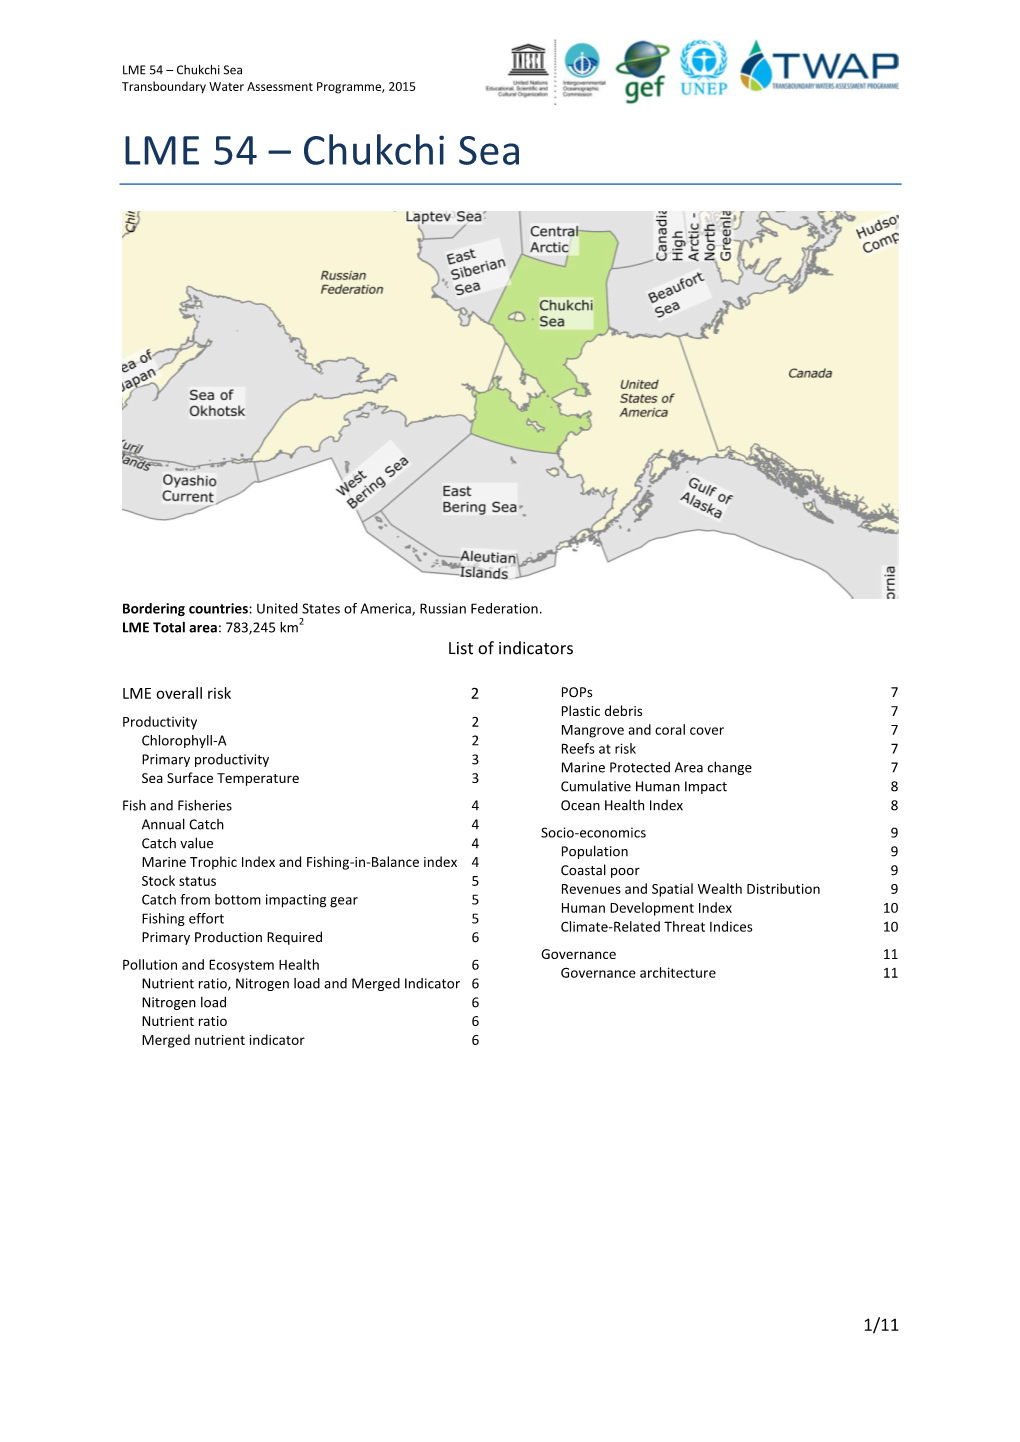 Chukchi Sea Transboundary Water Assessment Programme, 2015